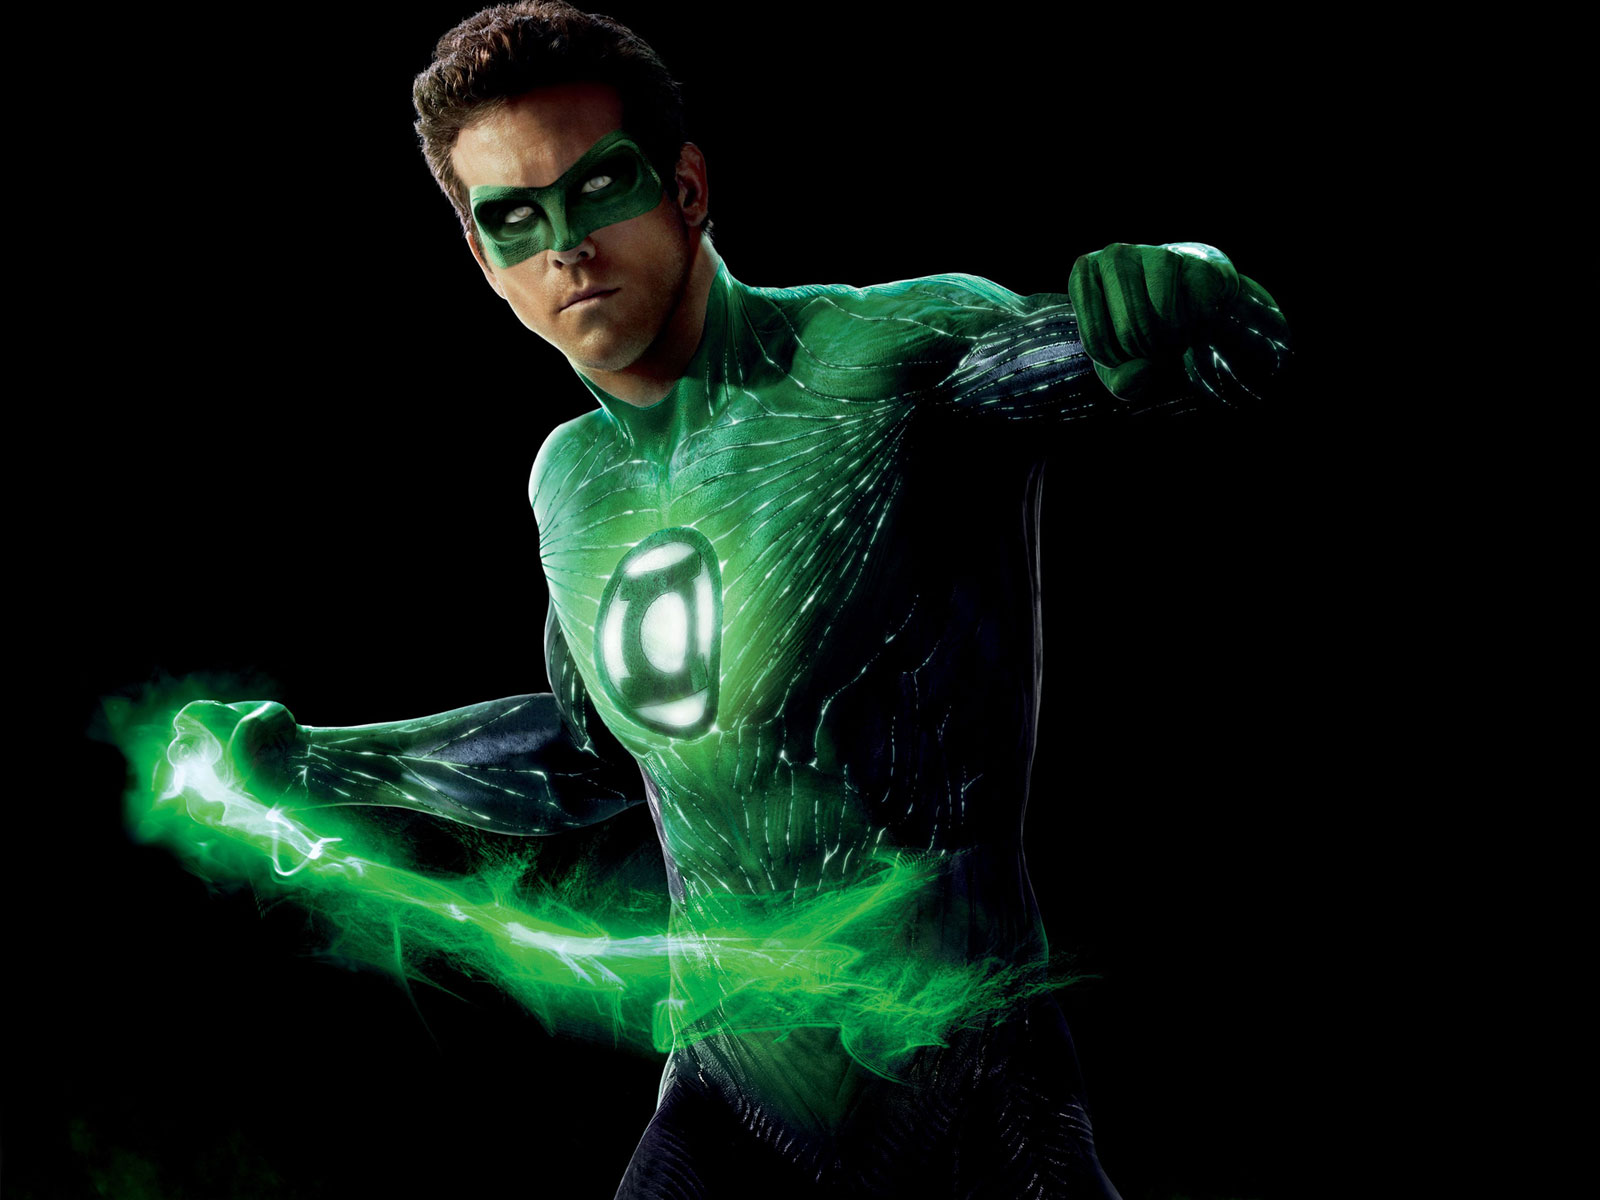 green lantern wallpaper,green lantern,green,fictional character,superhero,justice league